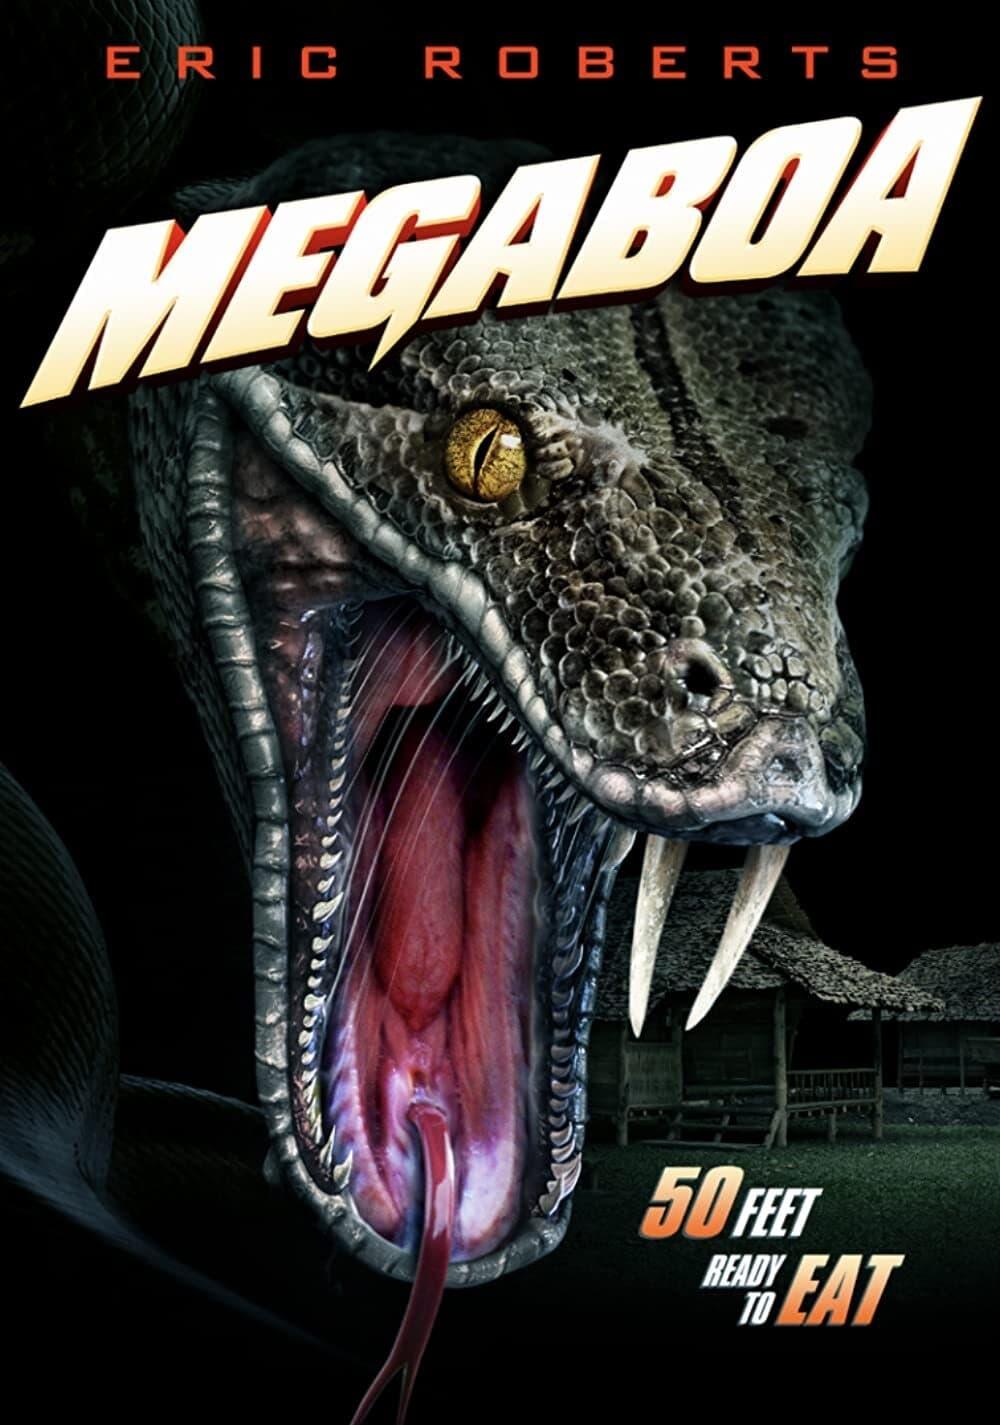 Megaboa poster